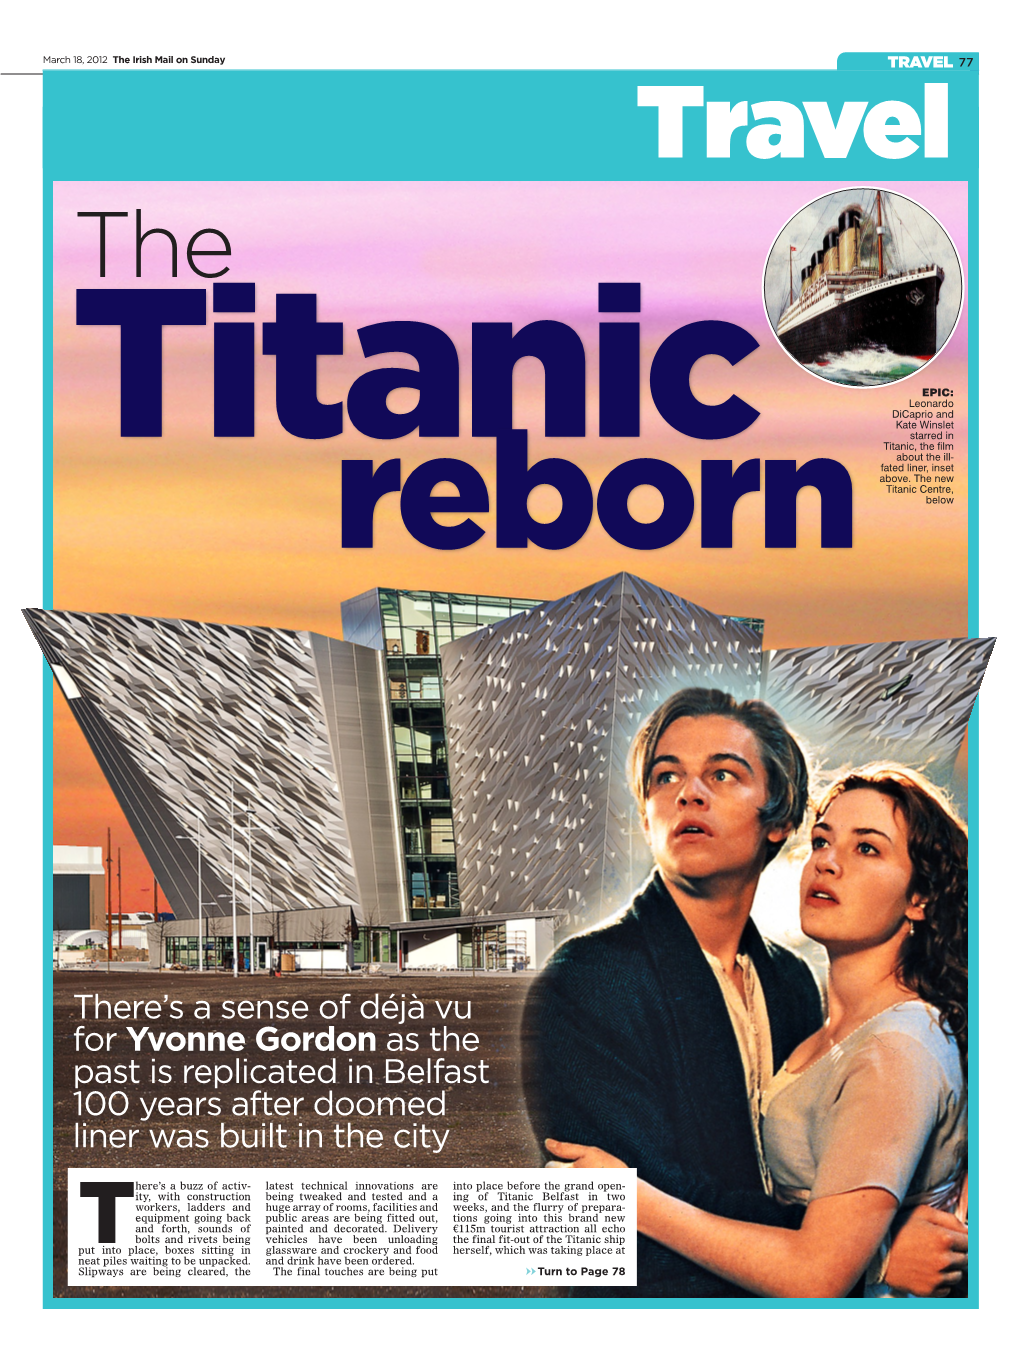 The Titanic Reborn – Belfast